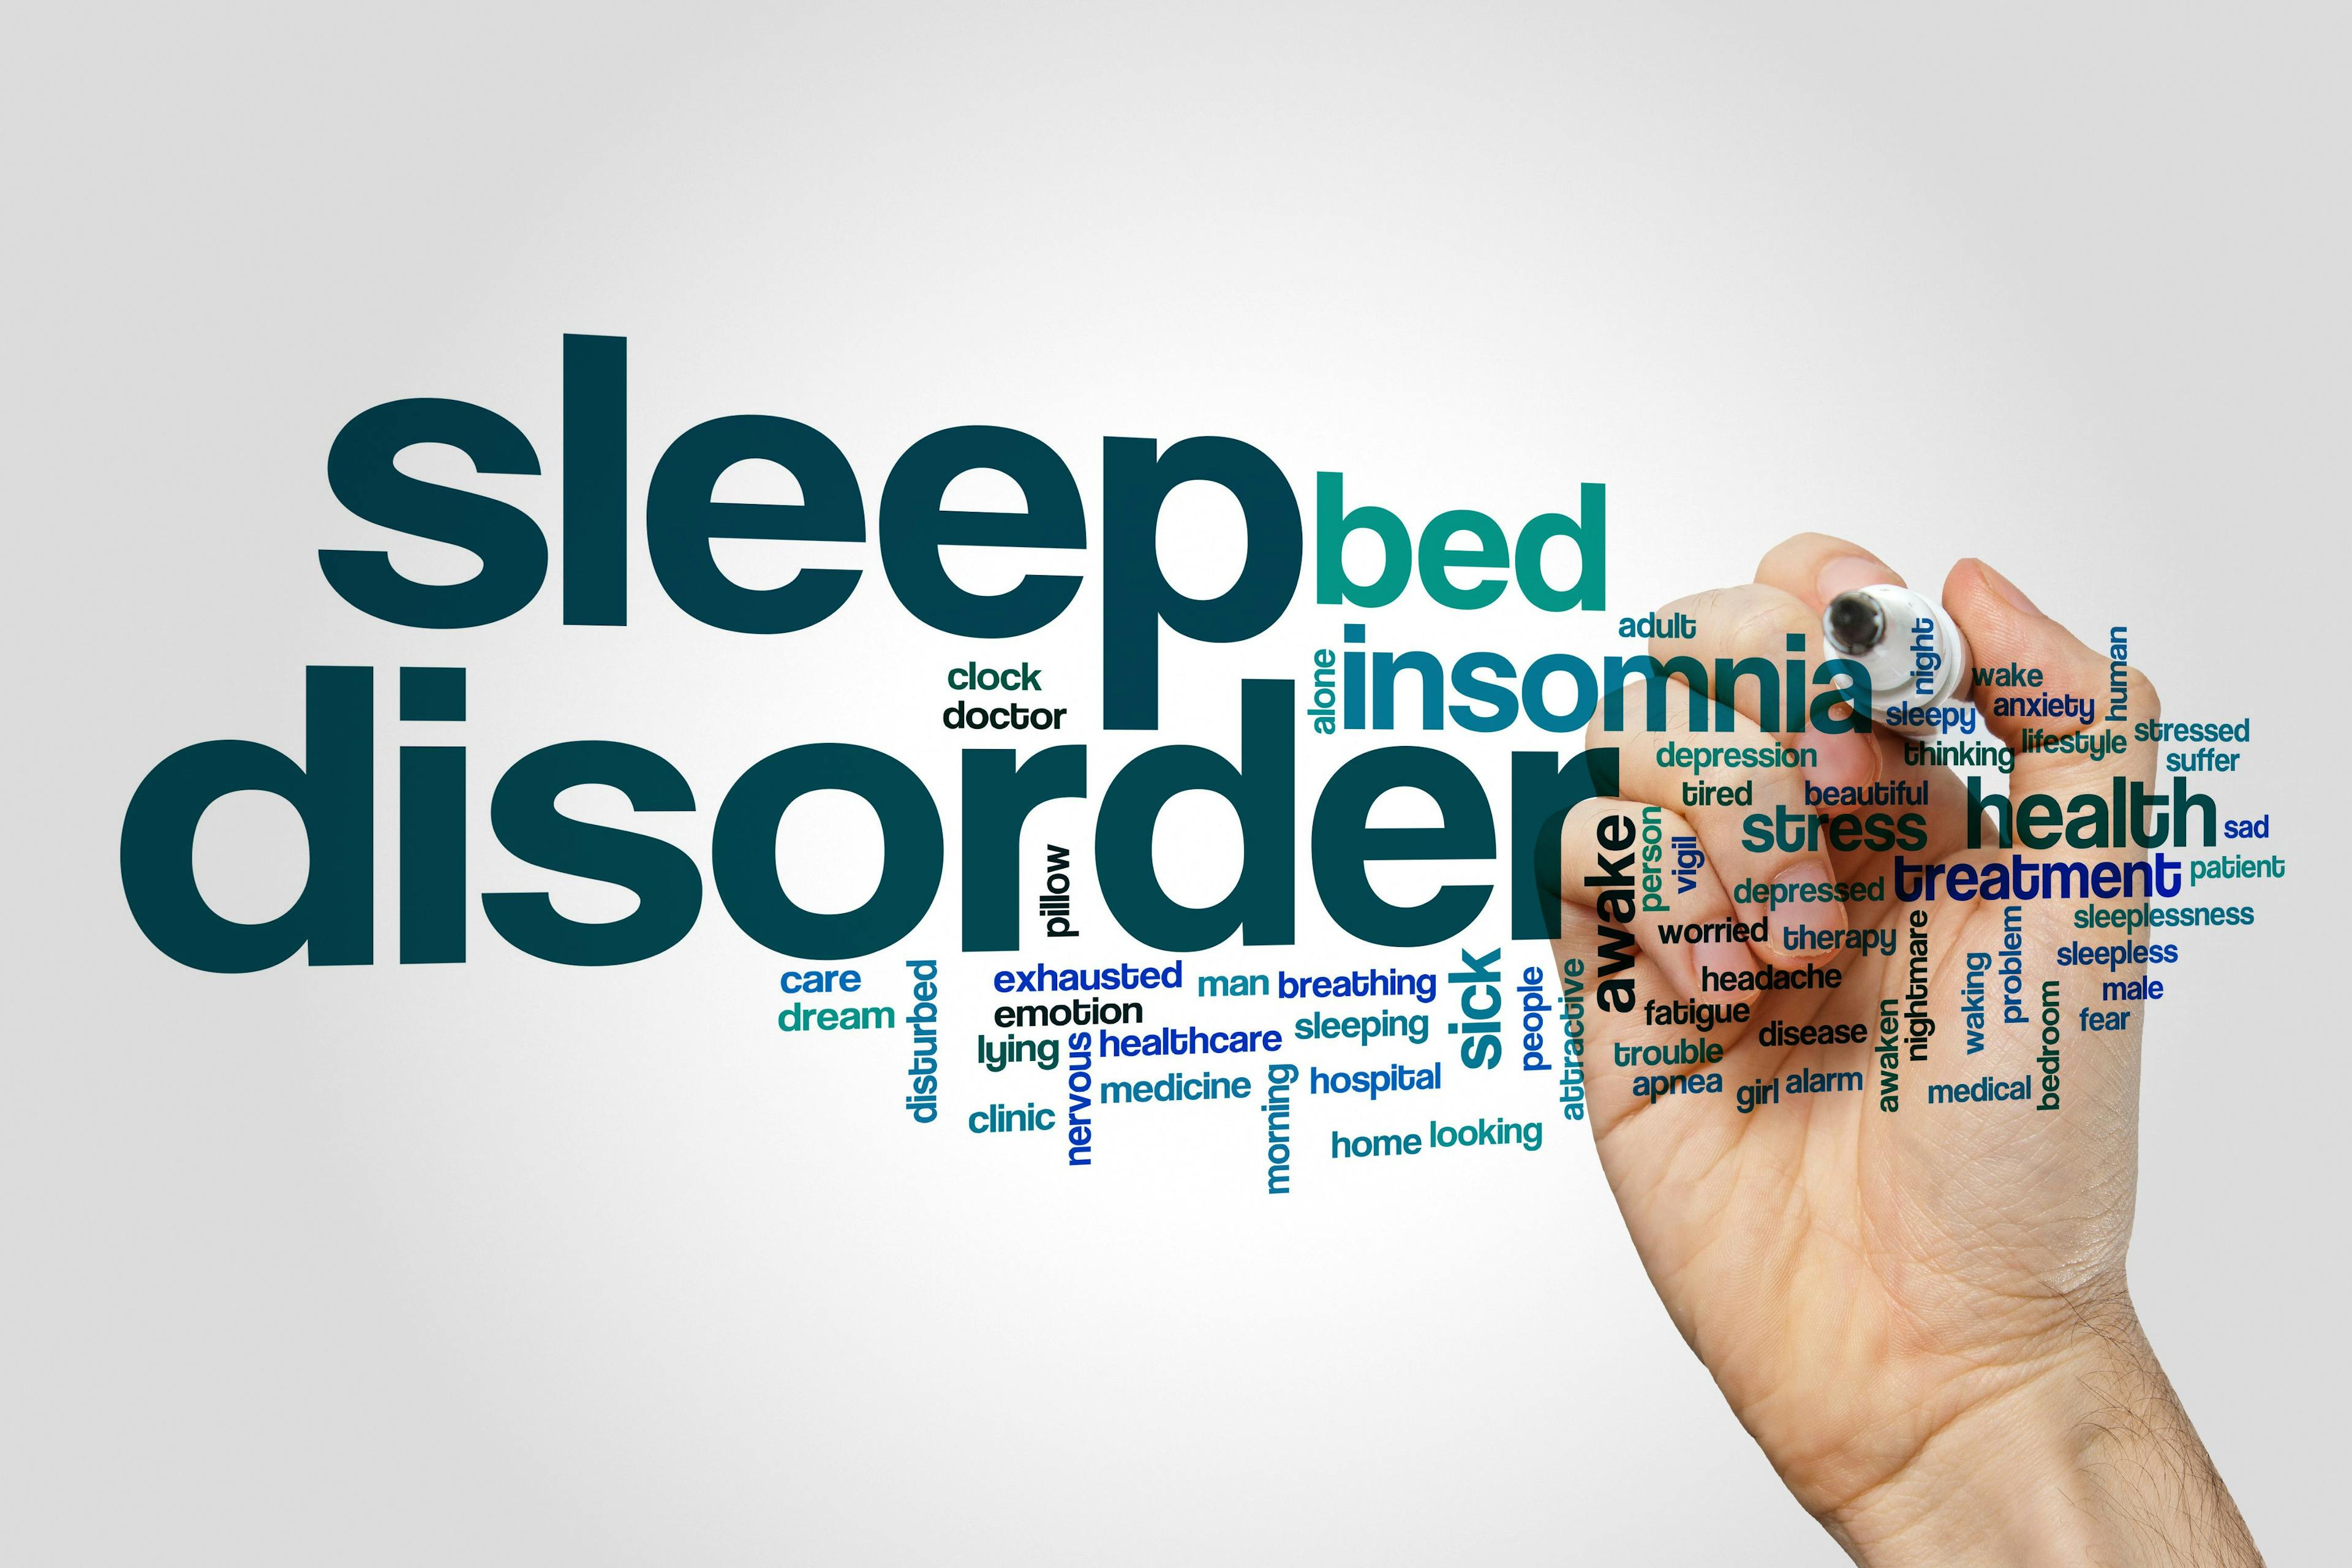 Sleep Disorders Graphic | image credit: ibreakstock - stock.adobe.com